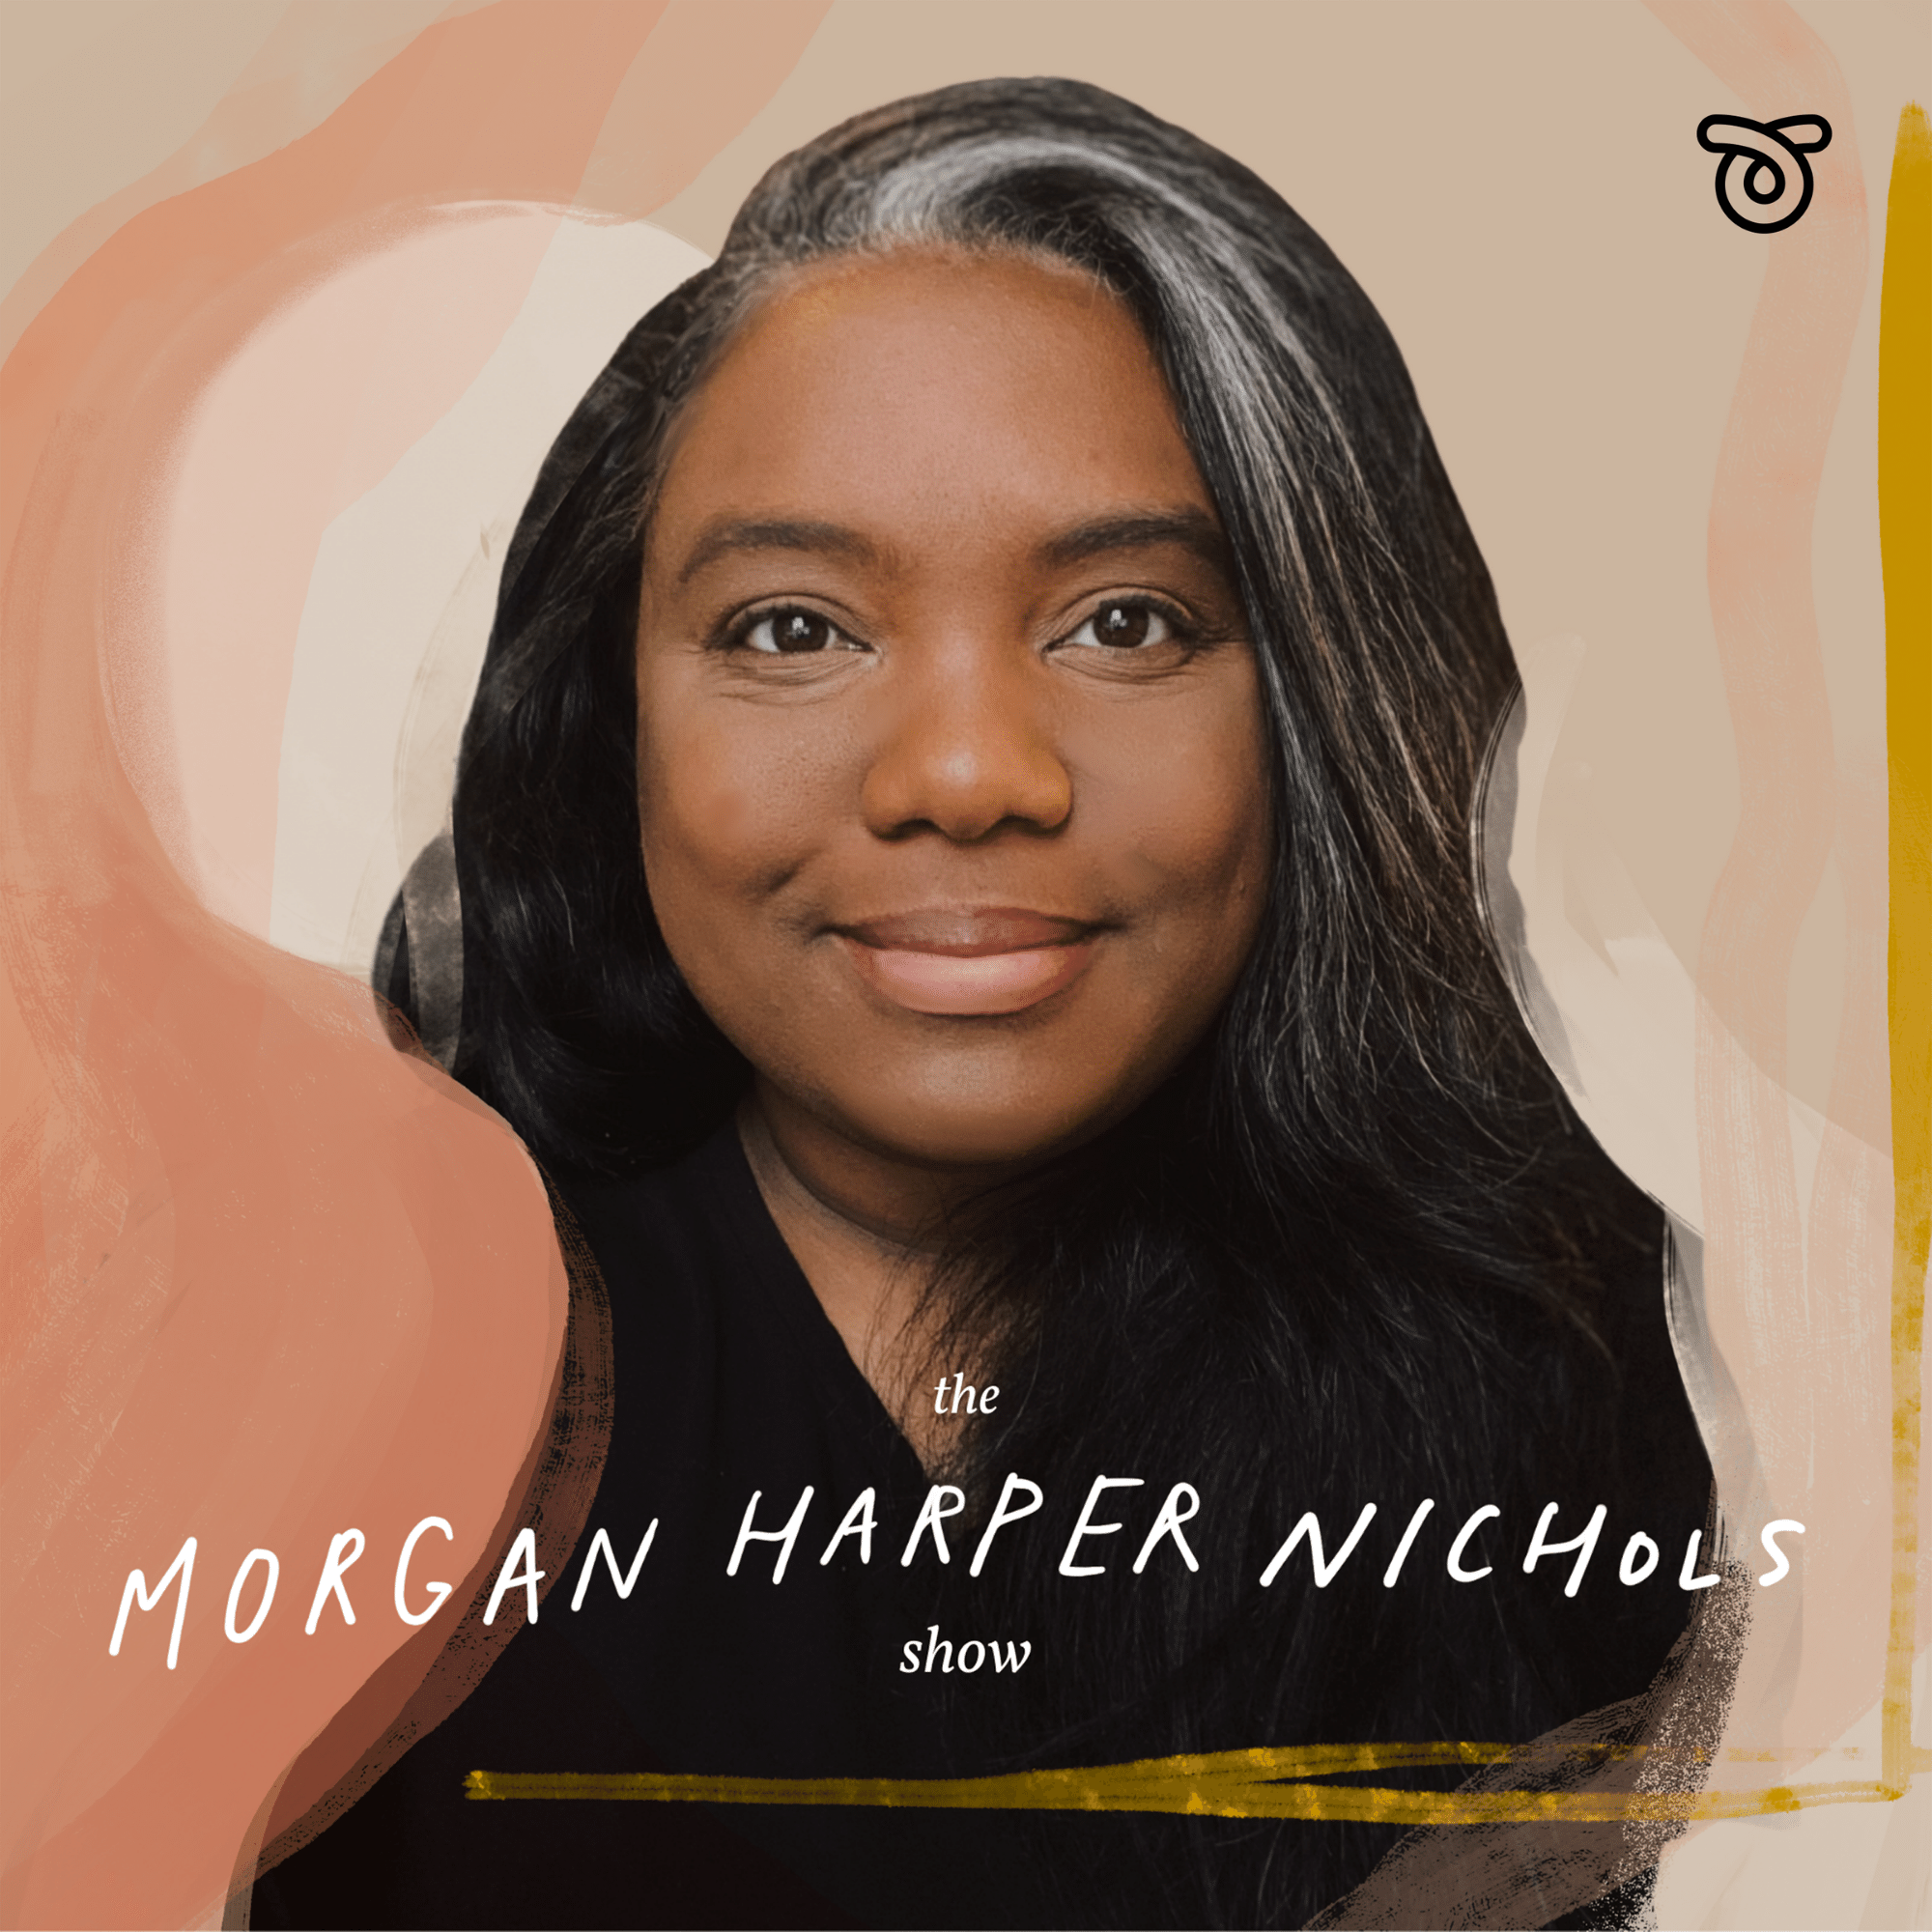 The Morgan Harper Nichols Show podcast show image